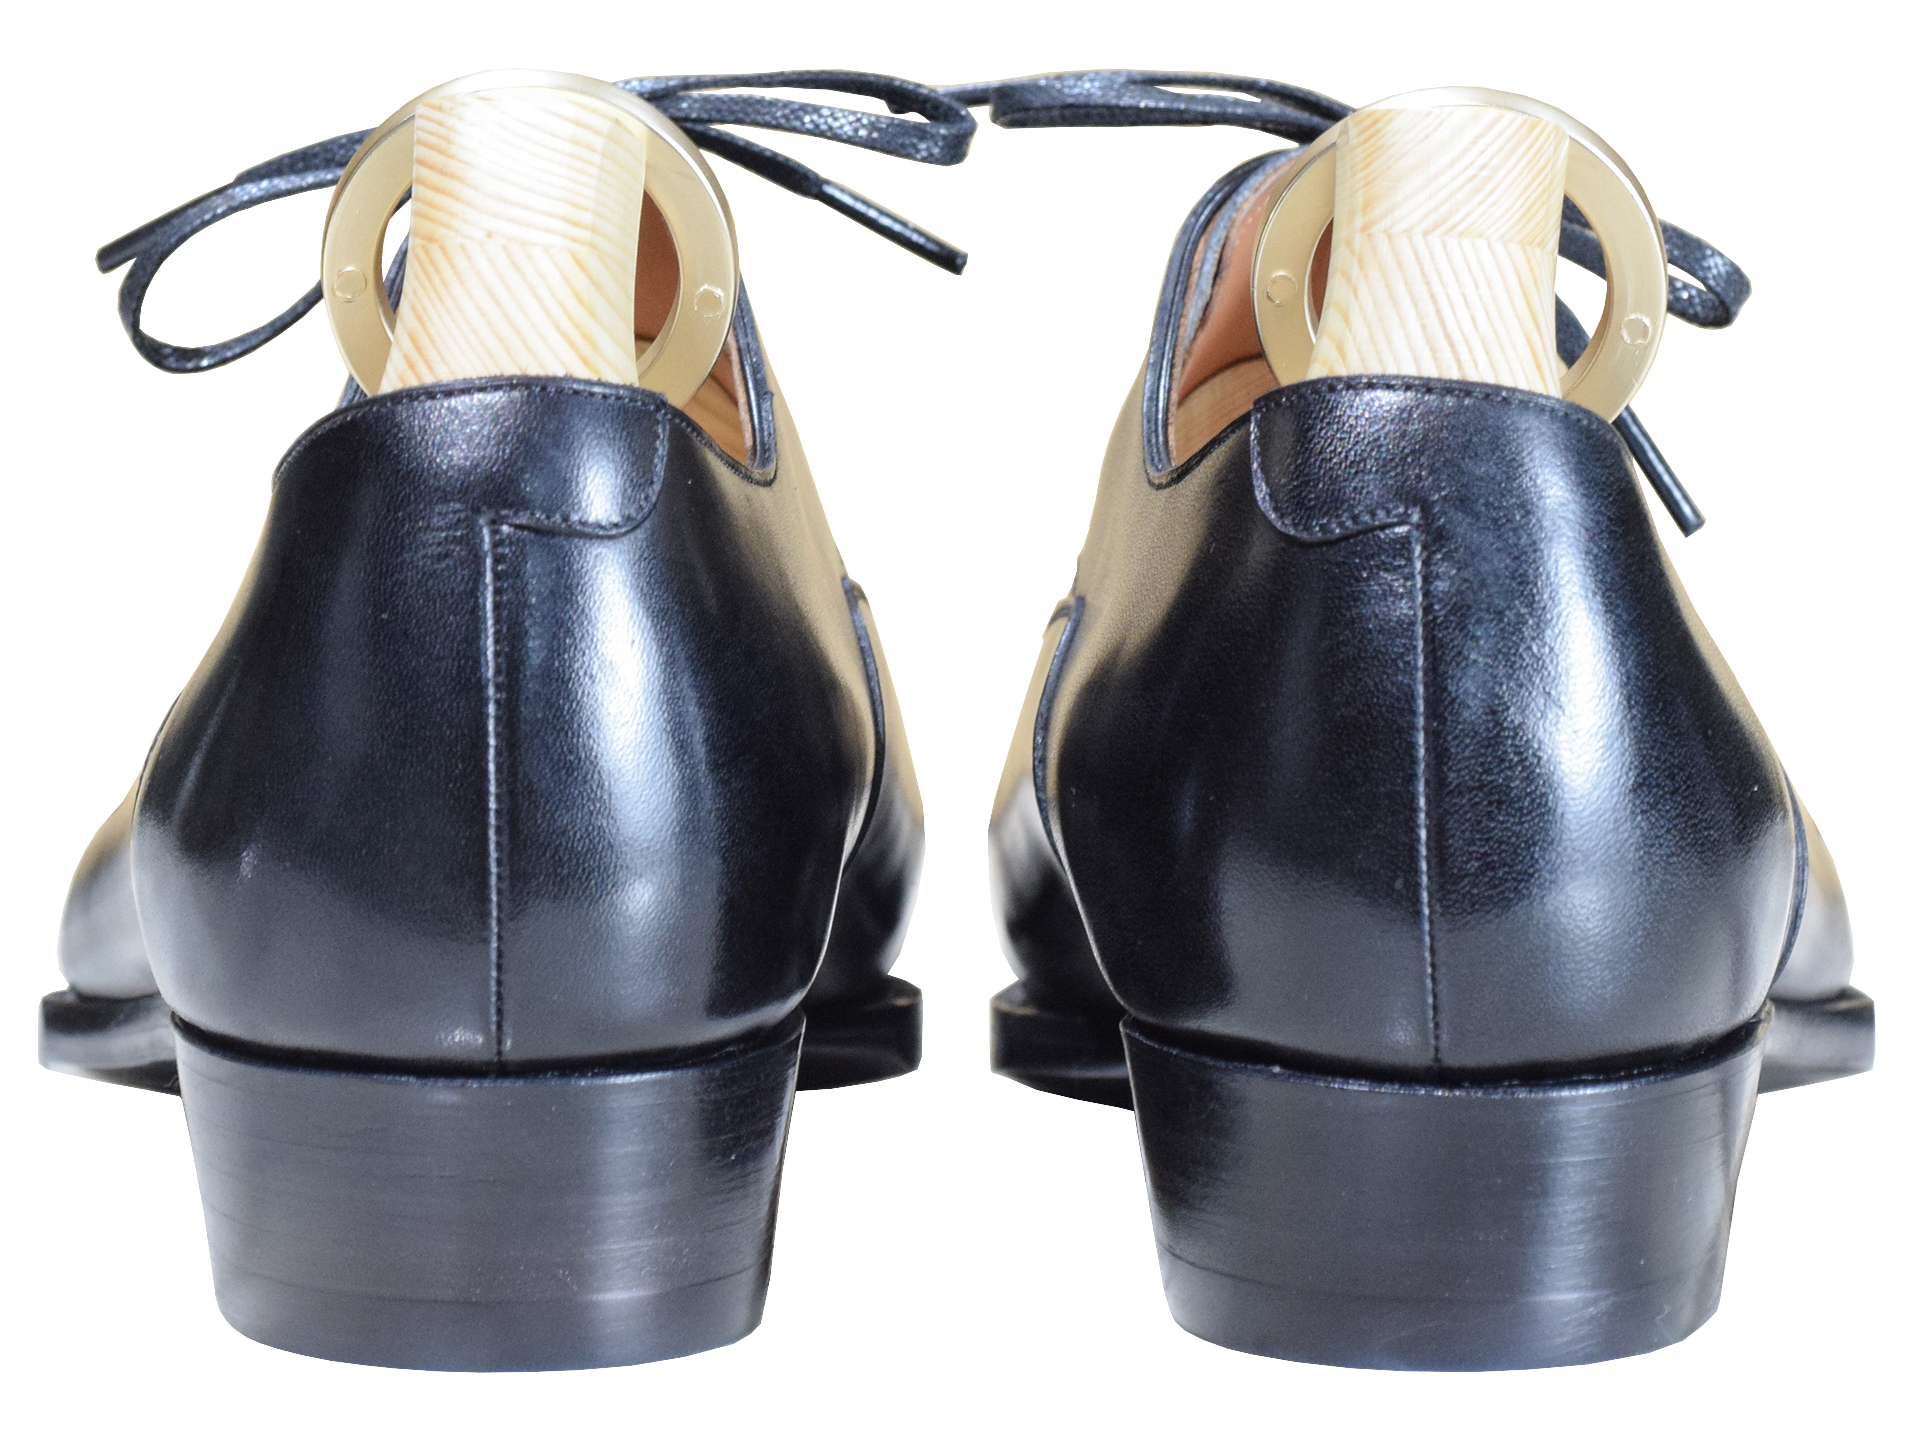 MTO Oxford captoe shoes - Basic line